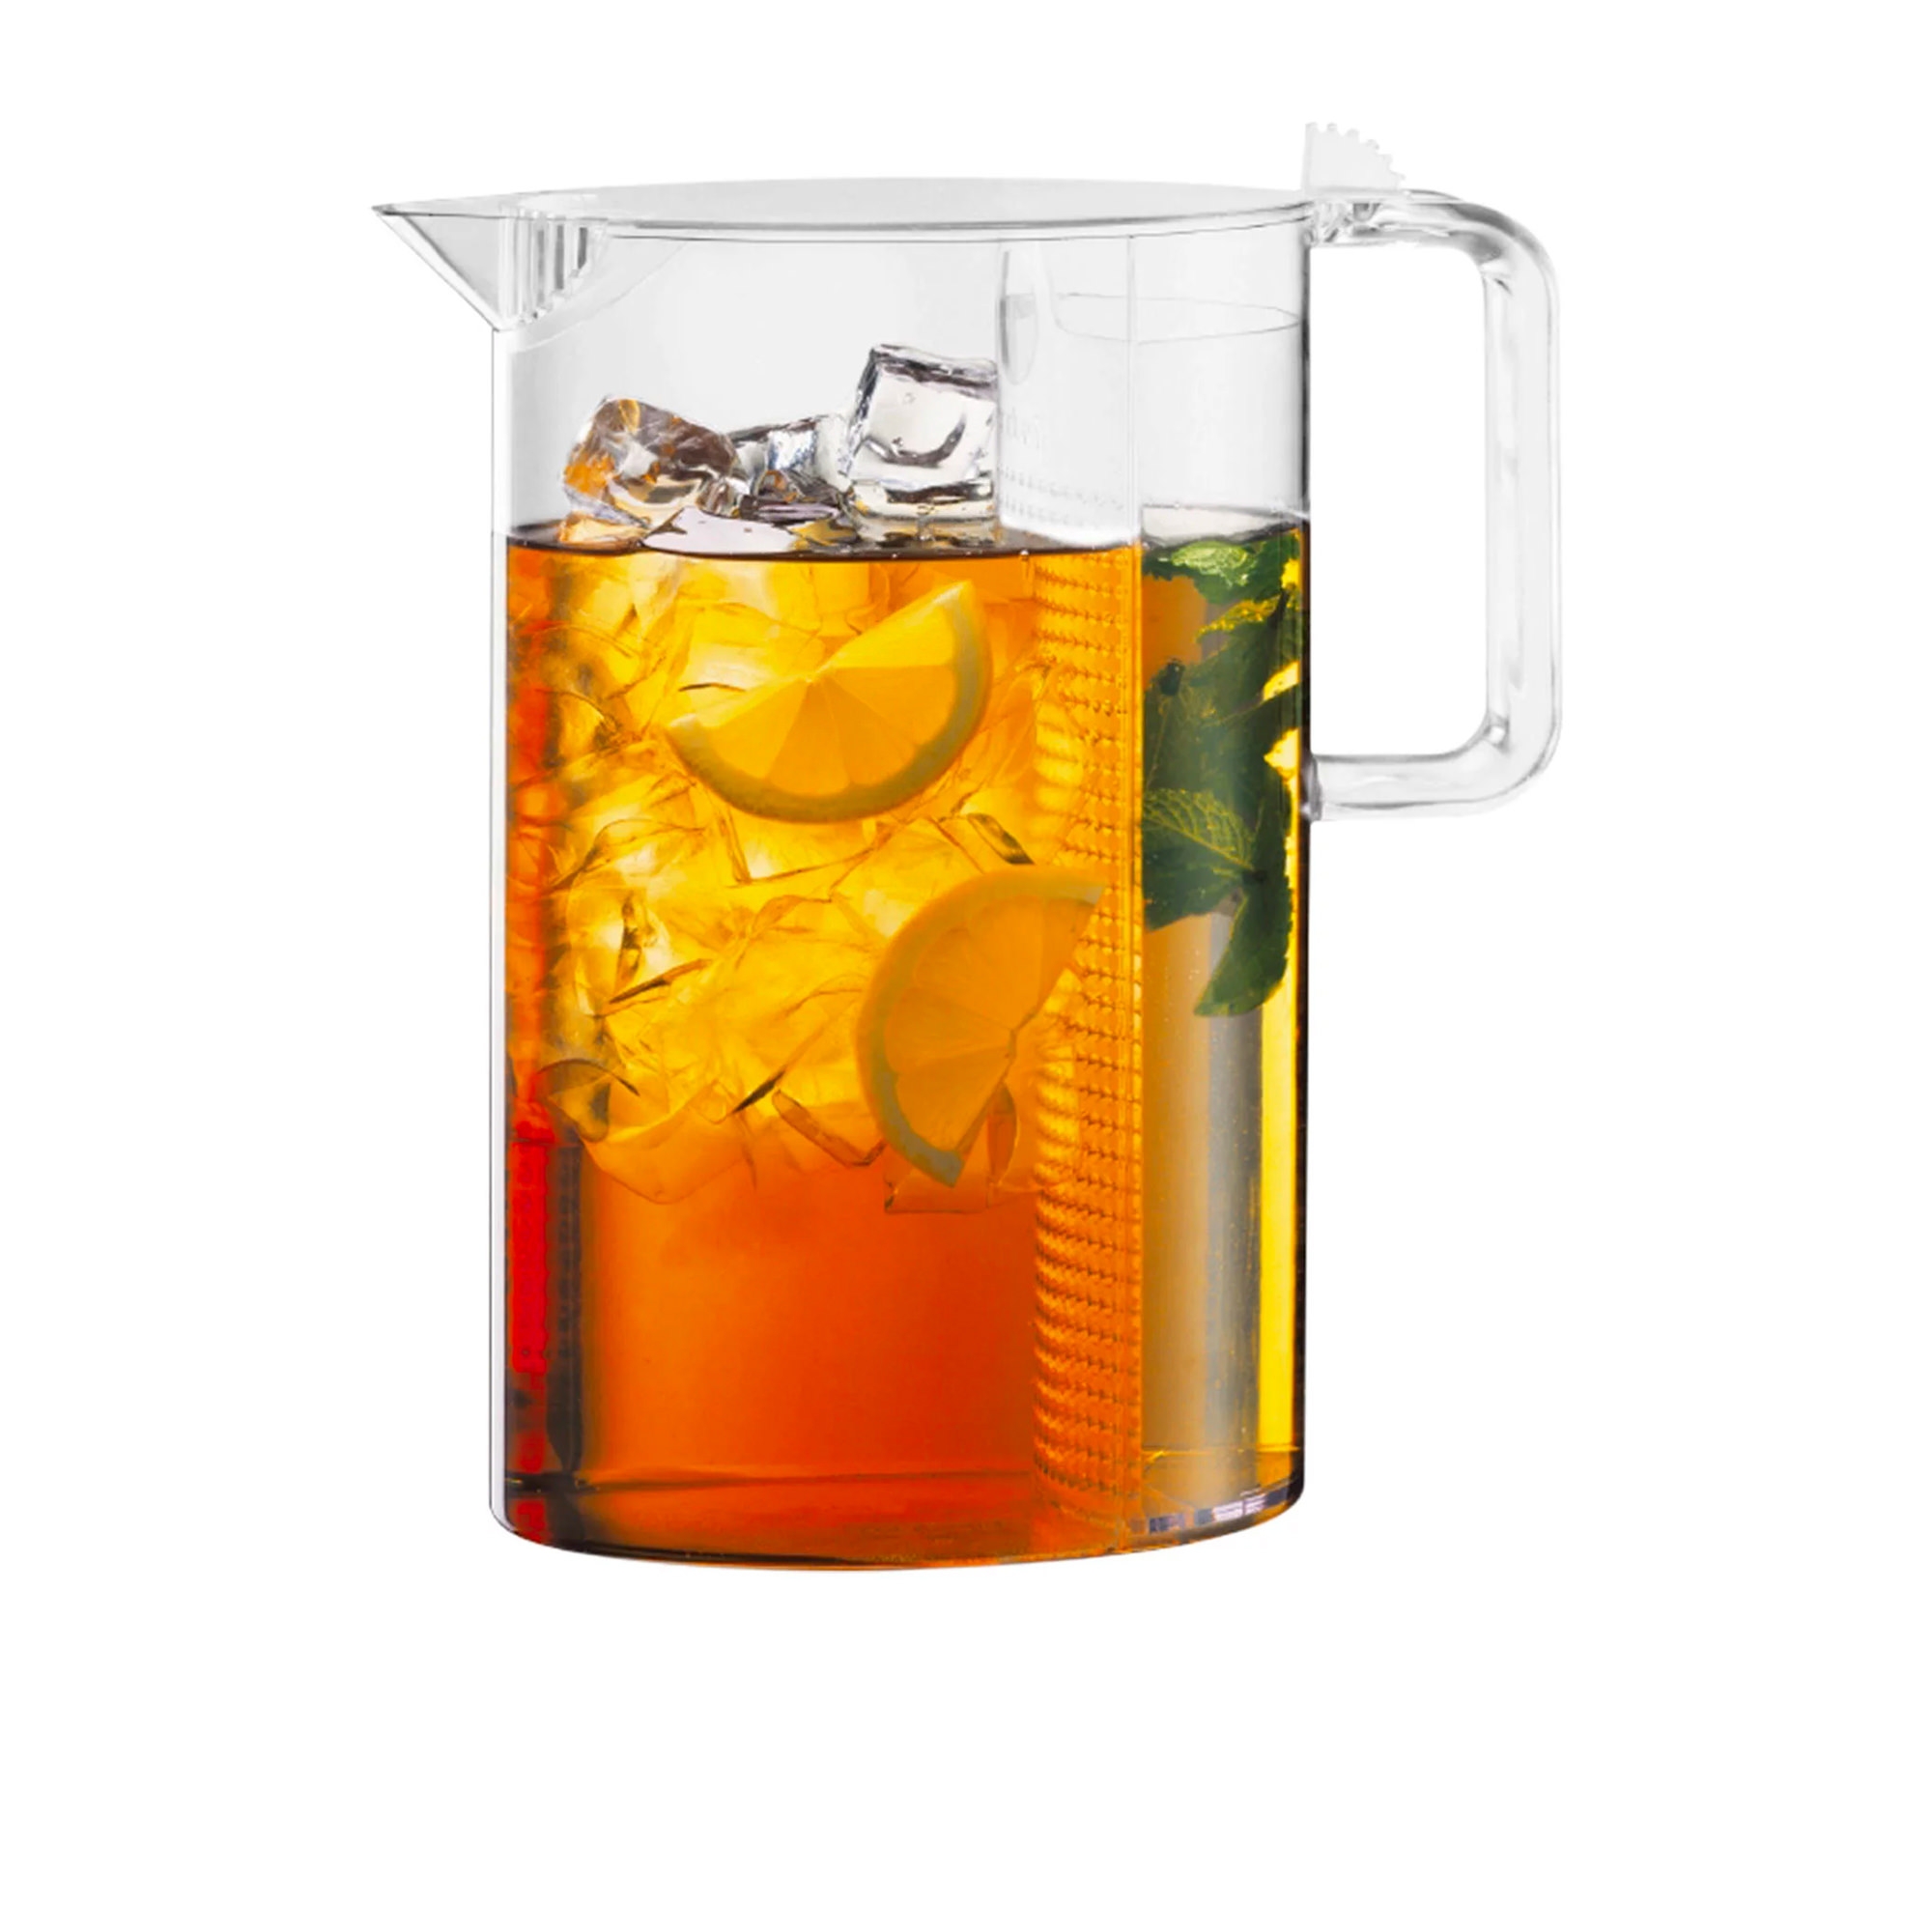 Bodum Ceylon Ice Tea Jug with Filter 3L Image 1